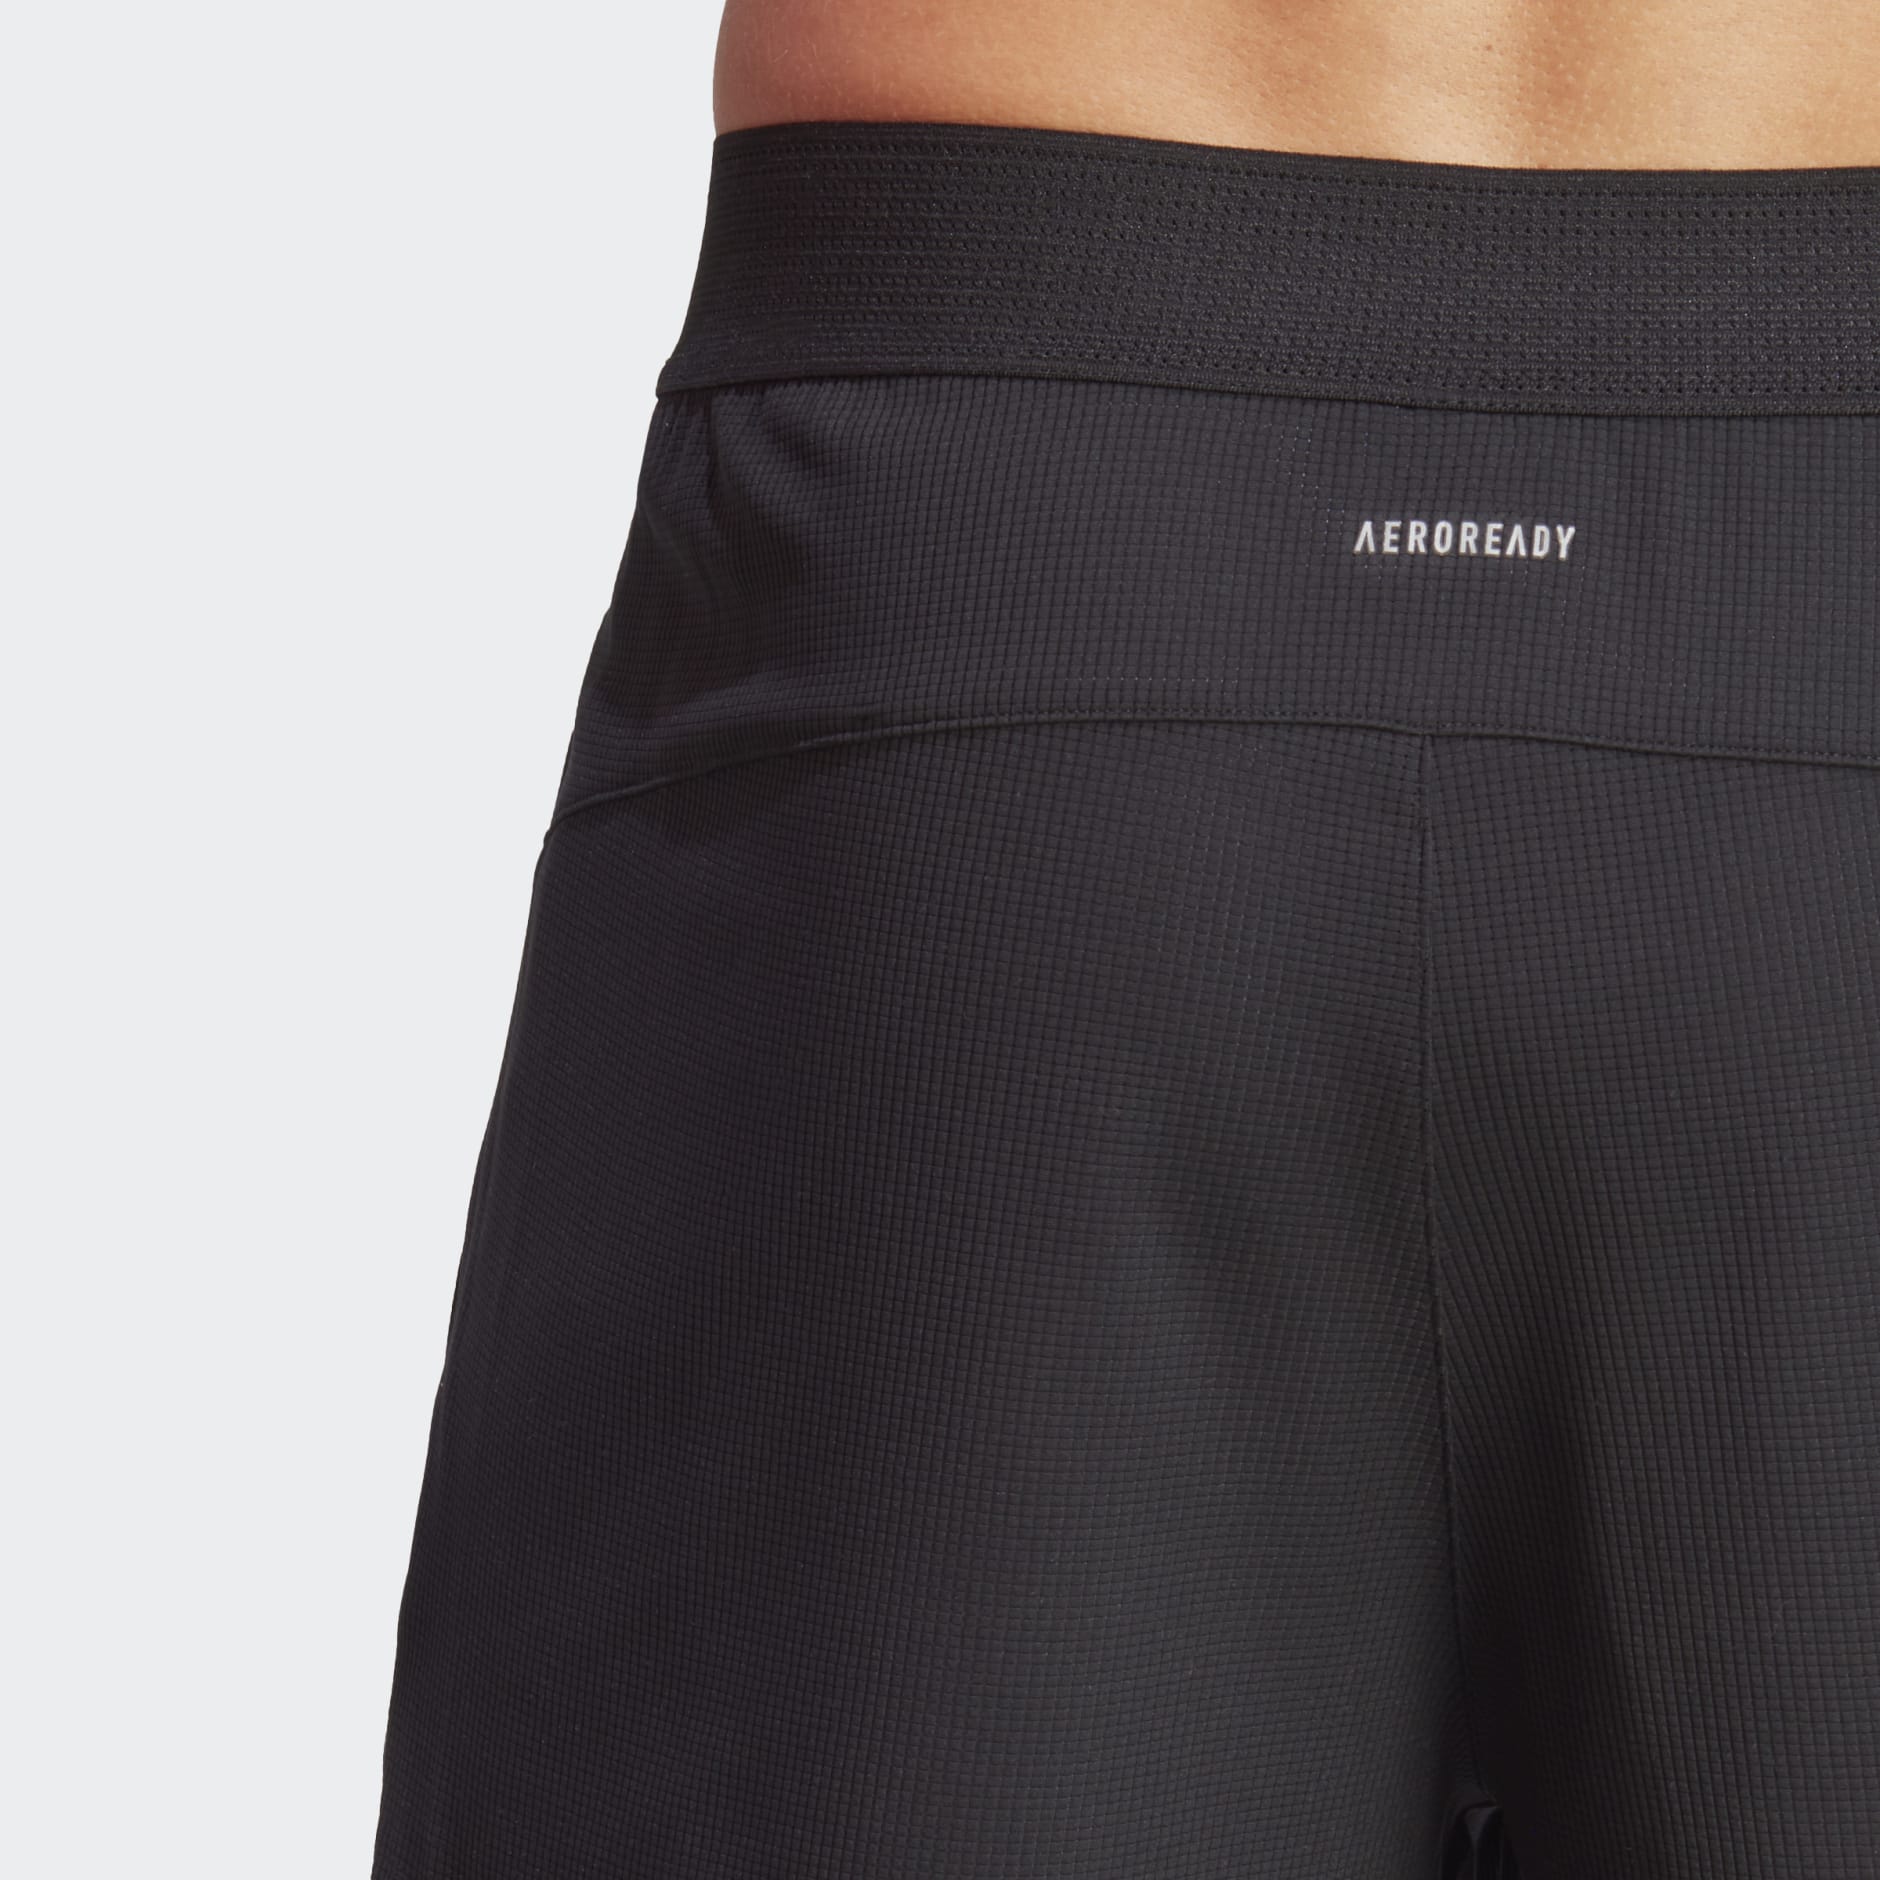 Men's Clothing - HIIT Training Shorts - Black | adidas Saudi Arabia